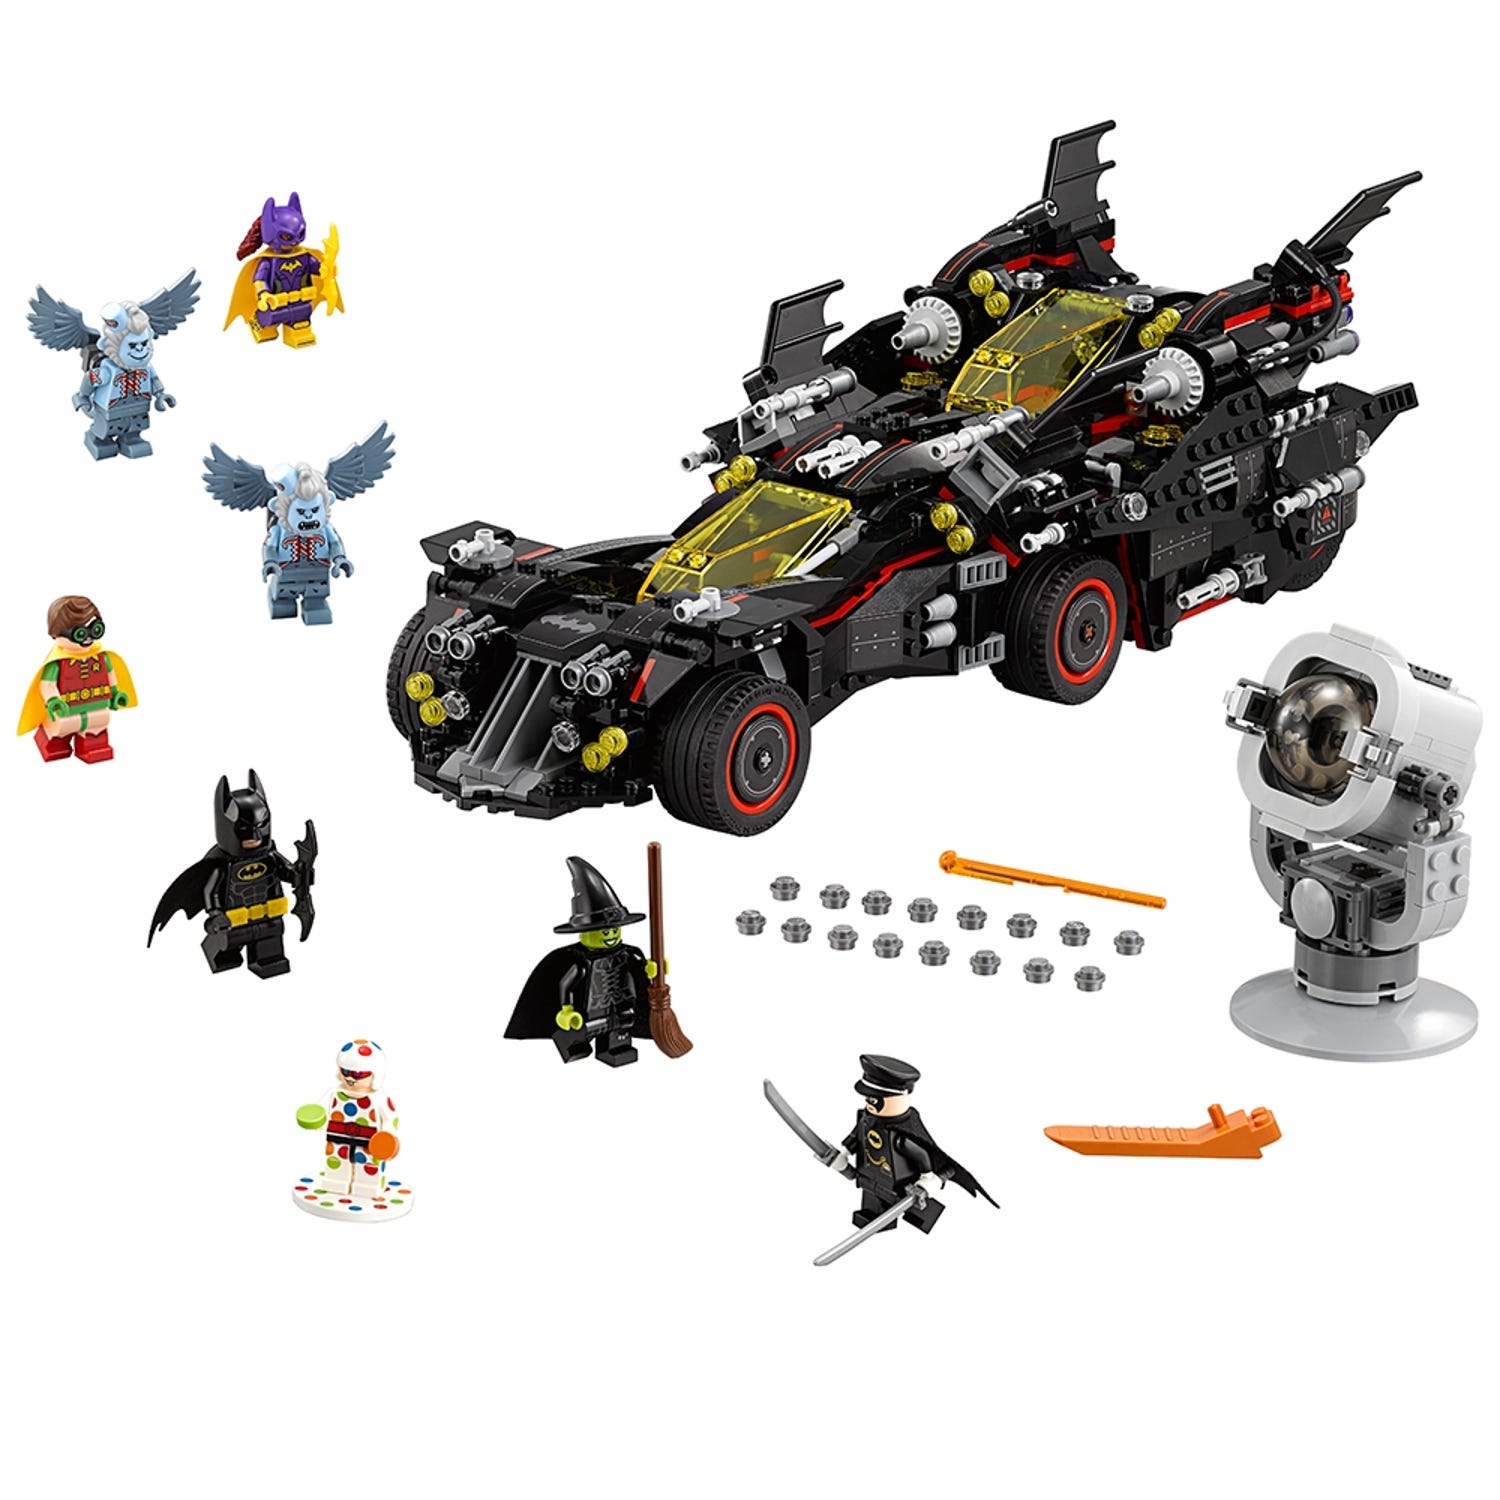 LEGO Batman The Batmobile Ultimate Collectors' Edition